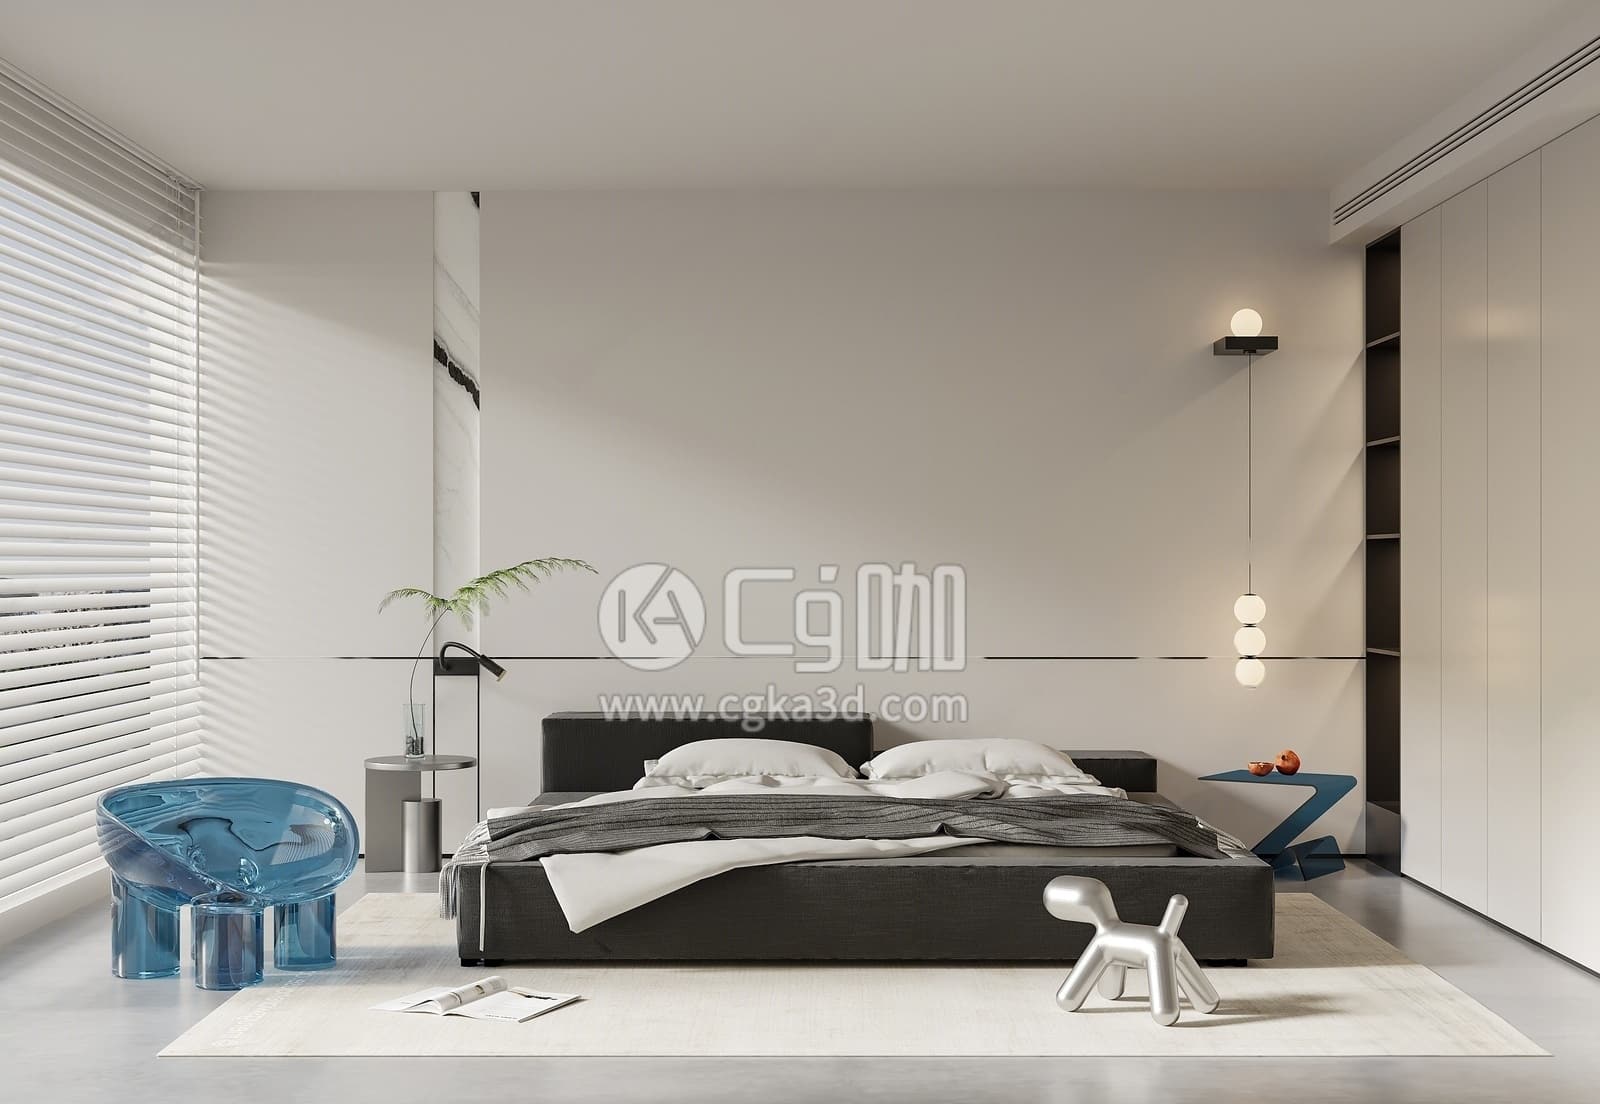 CG咖-blender-客厅卧室场景模型6